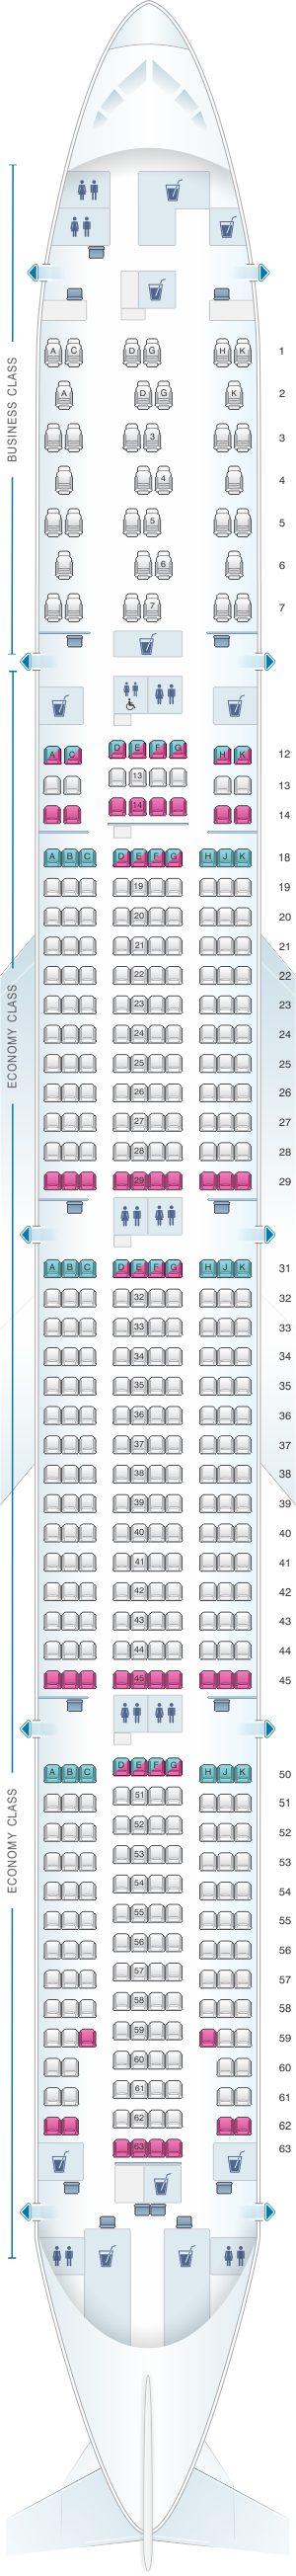 air canada boeing 777 300er seating